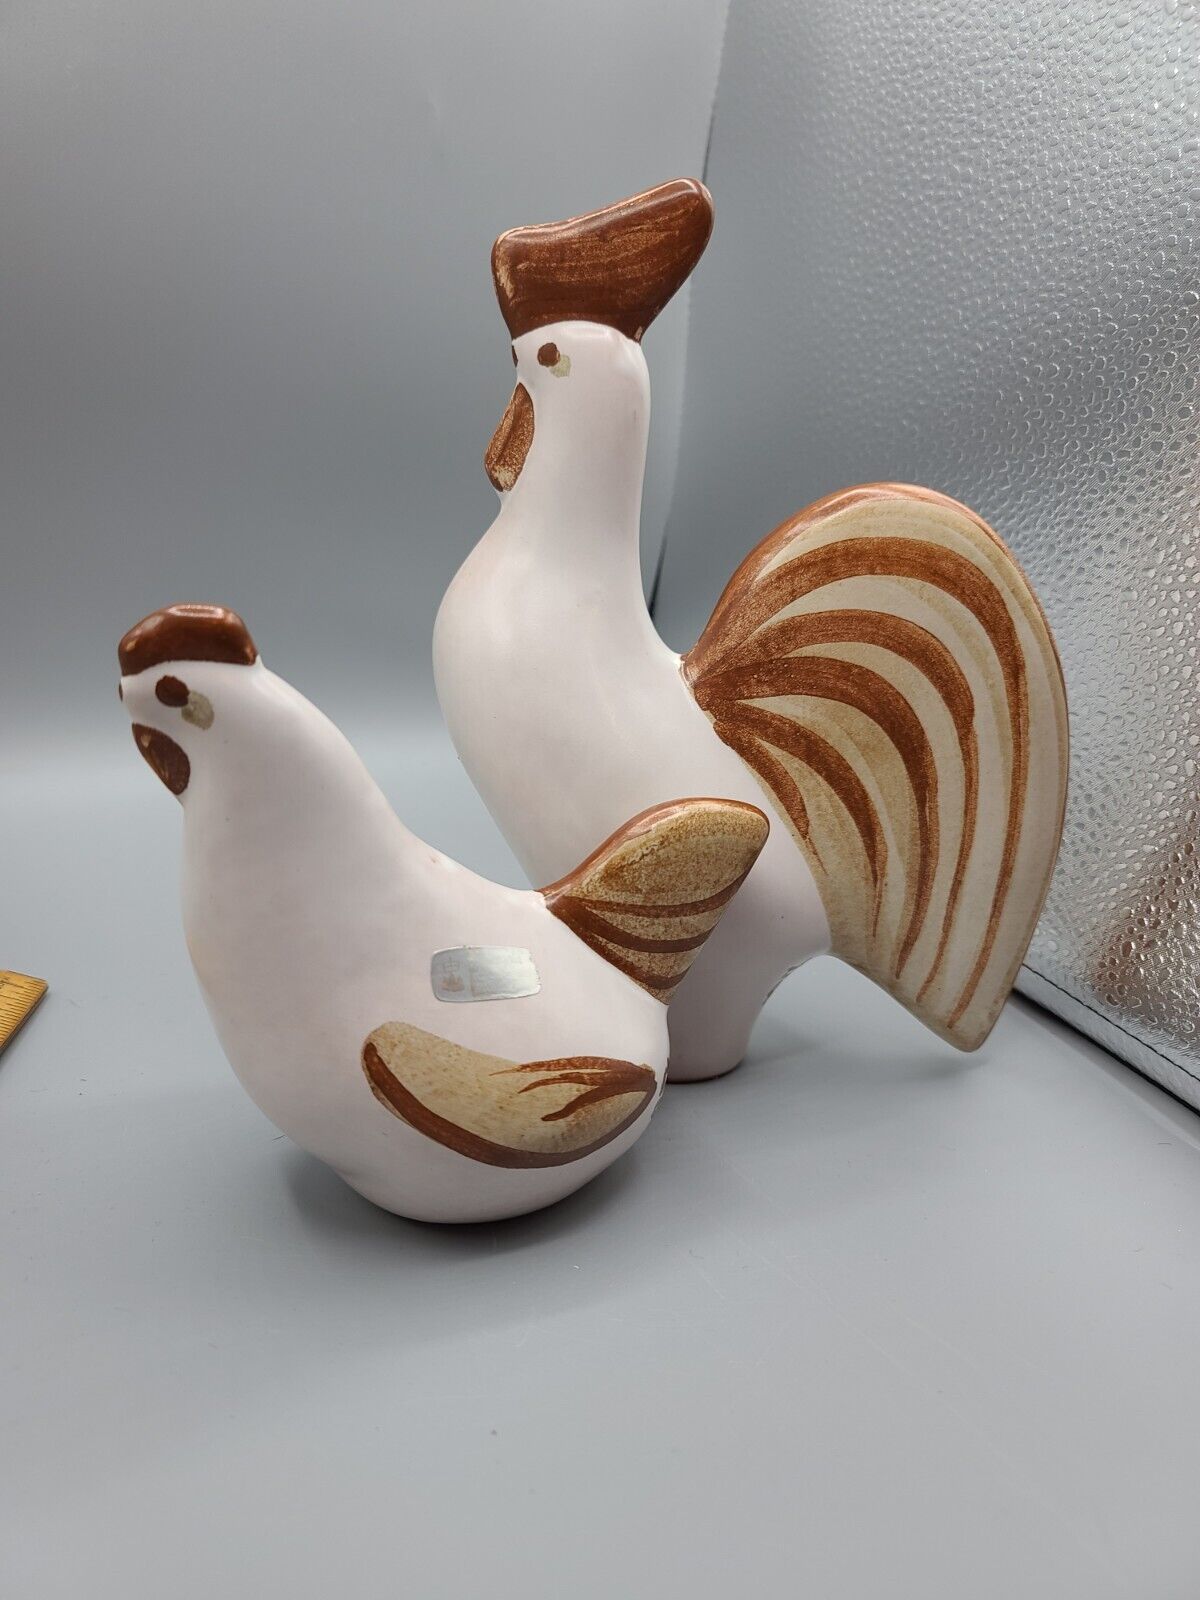 Vintage Artesania pair of Roosters Ceramic Figurine